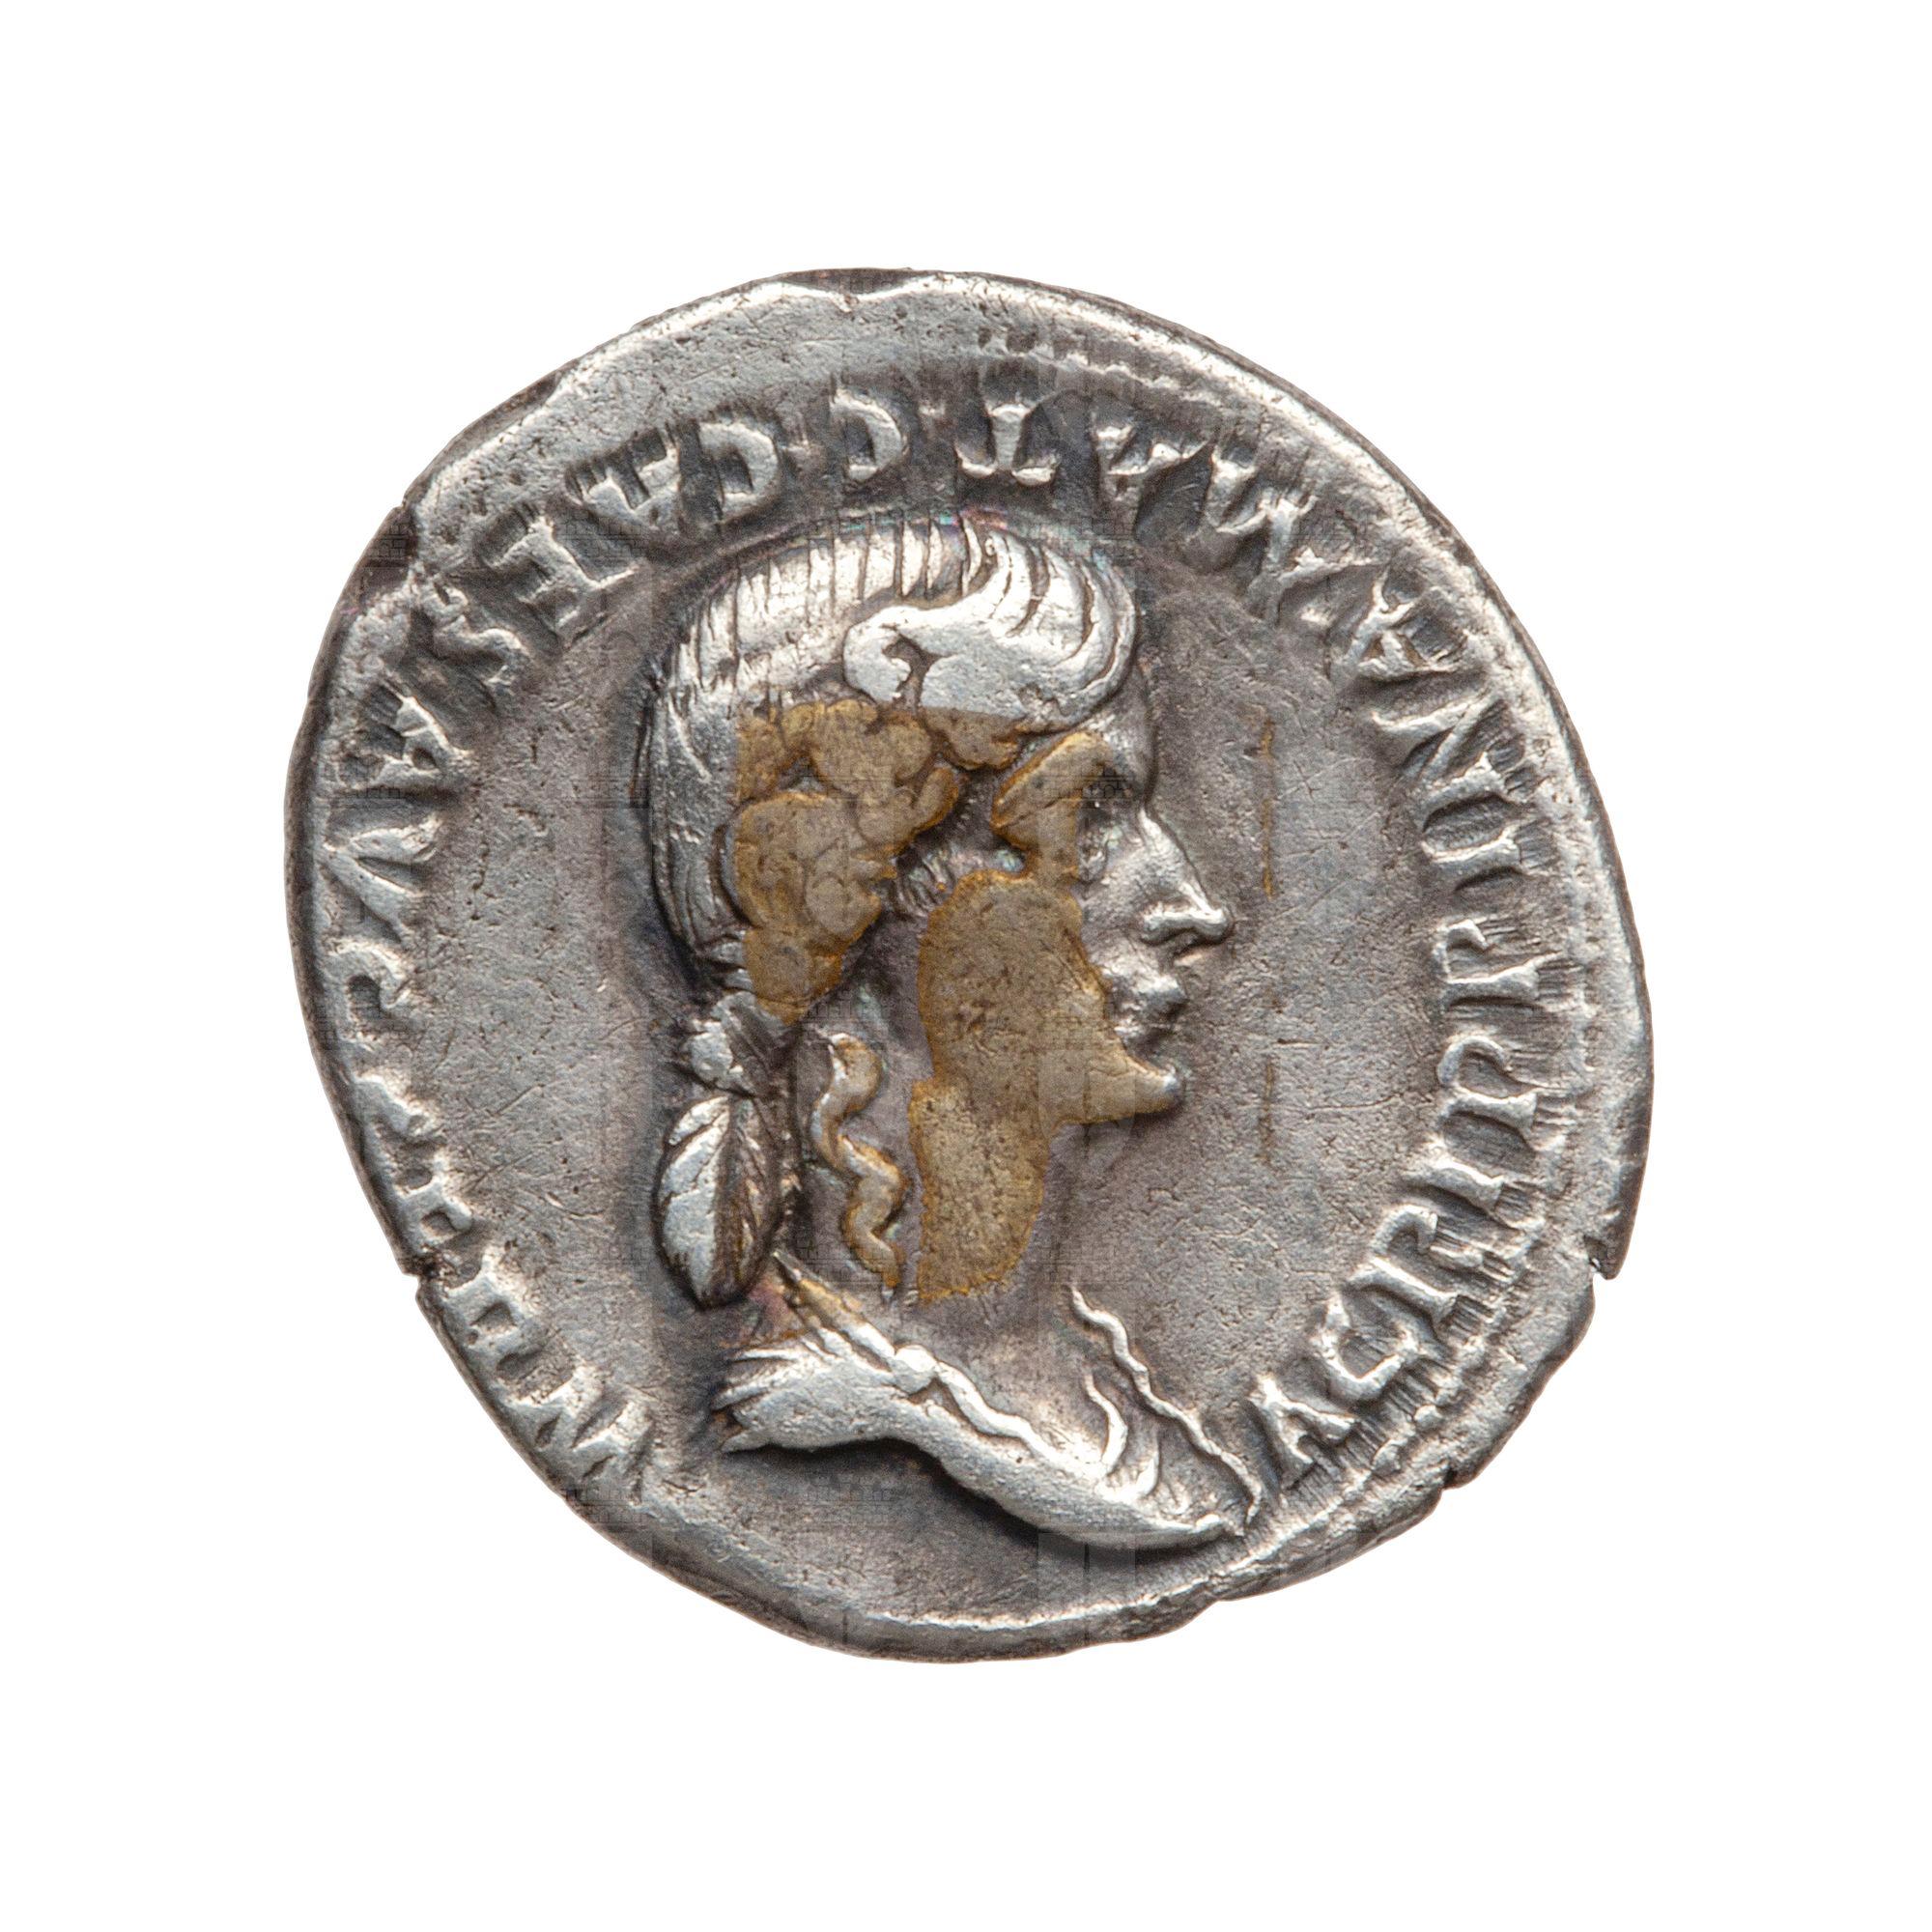 https://catalogomusei.comune.trieste.it/samira/resource/image/reperti-archeologici/Roma 86 R Caligola.jpg?token=65698d433b3e0